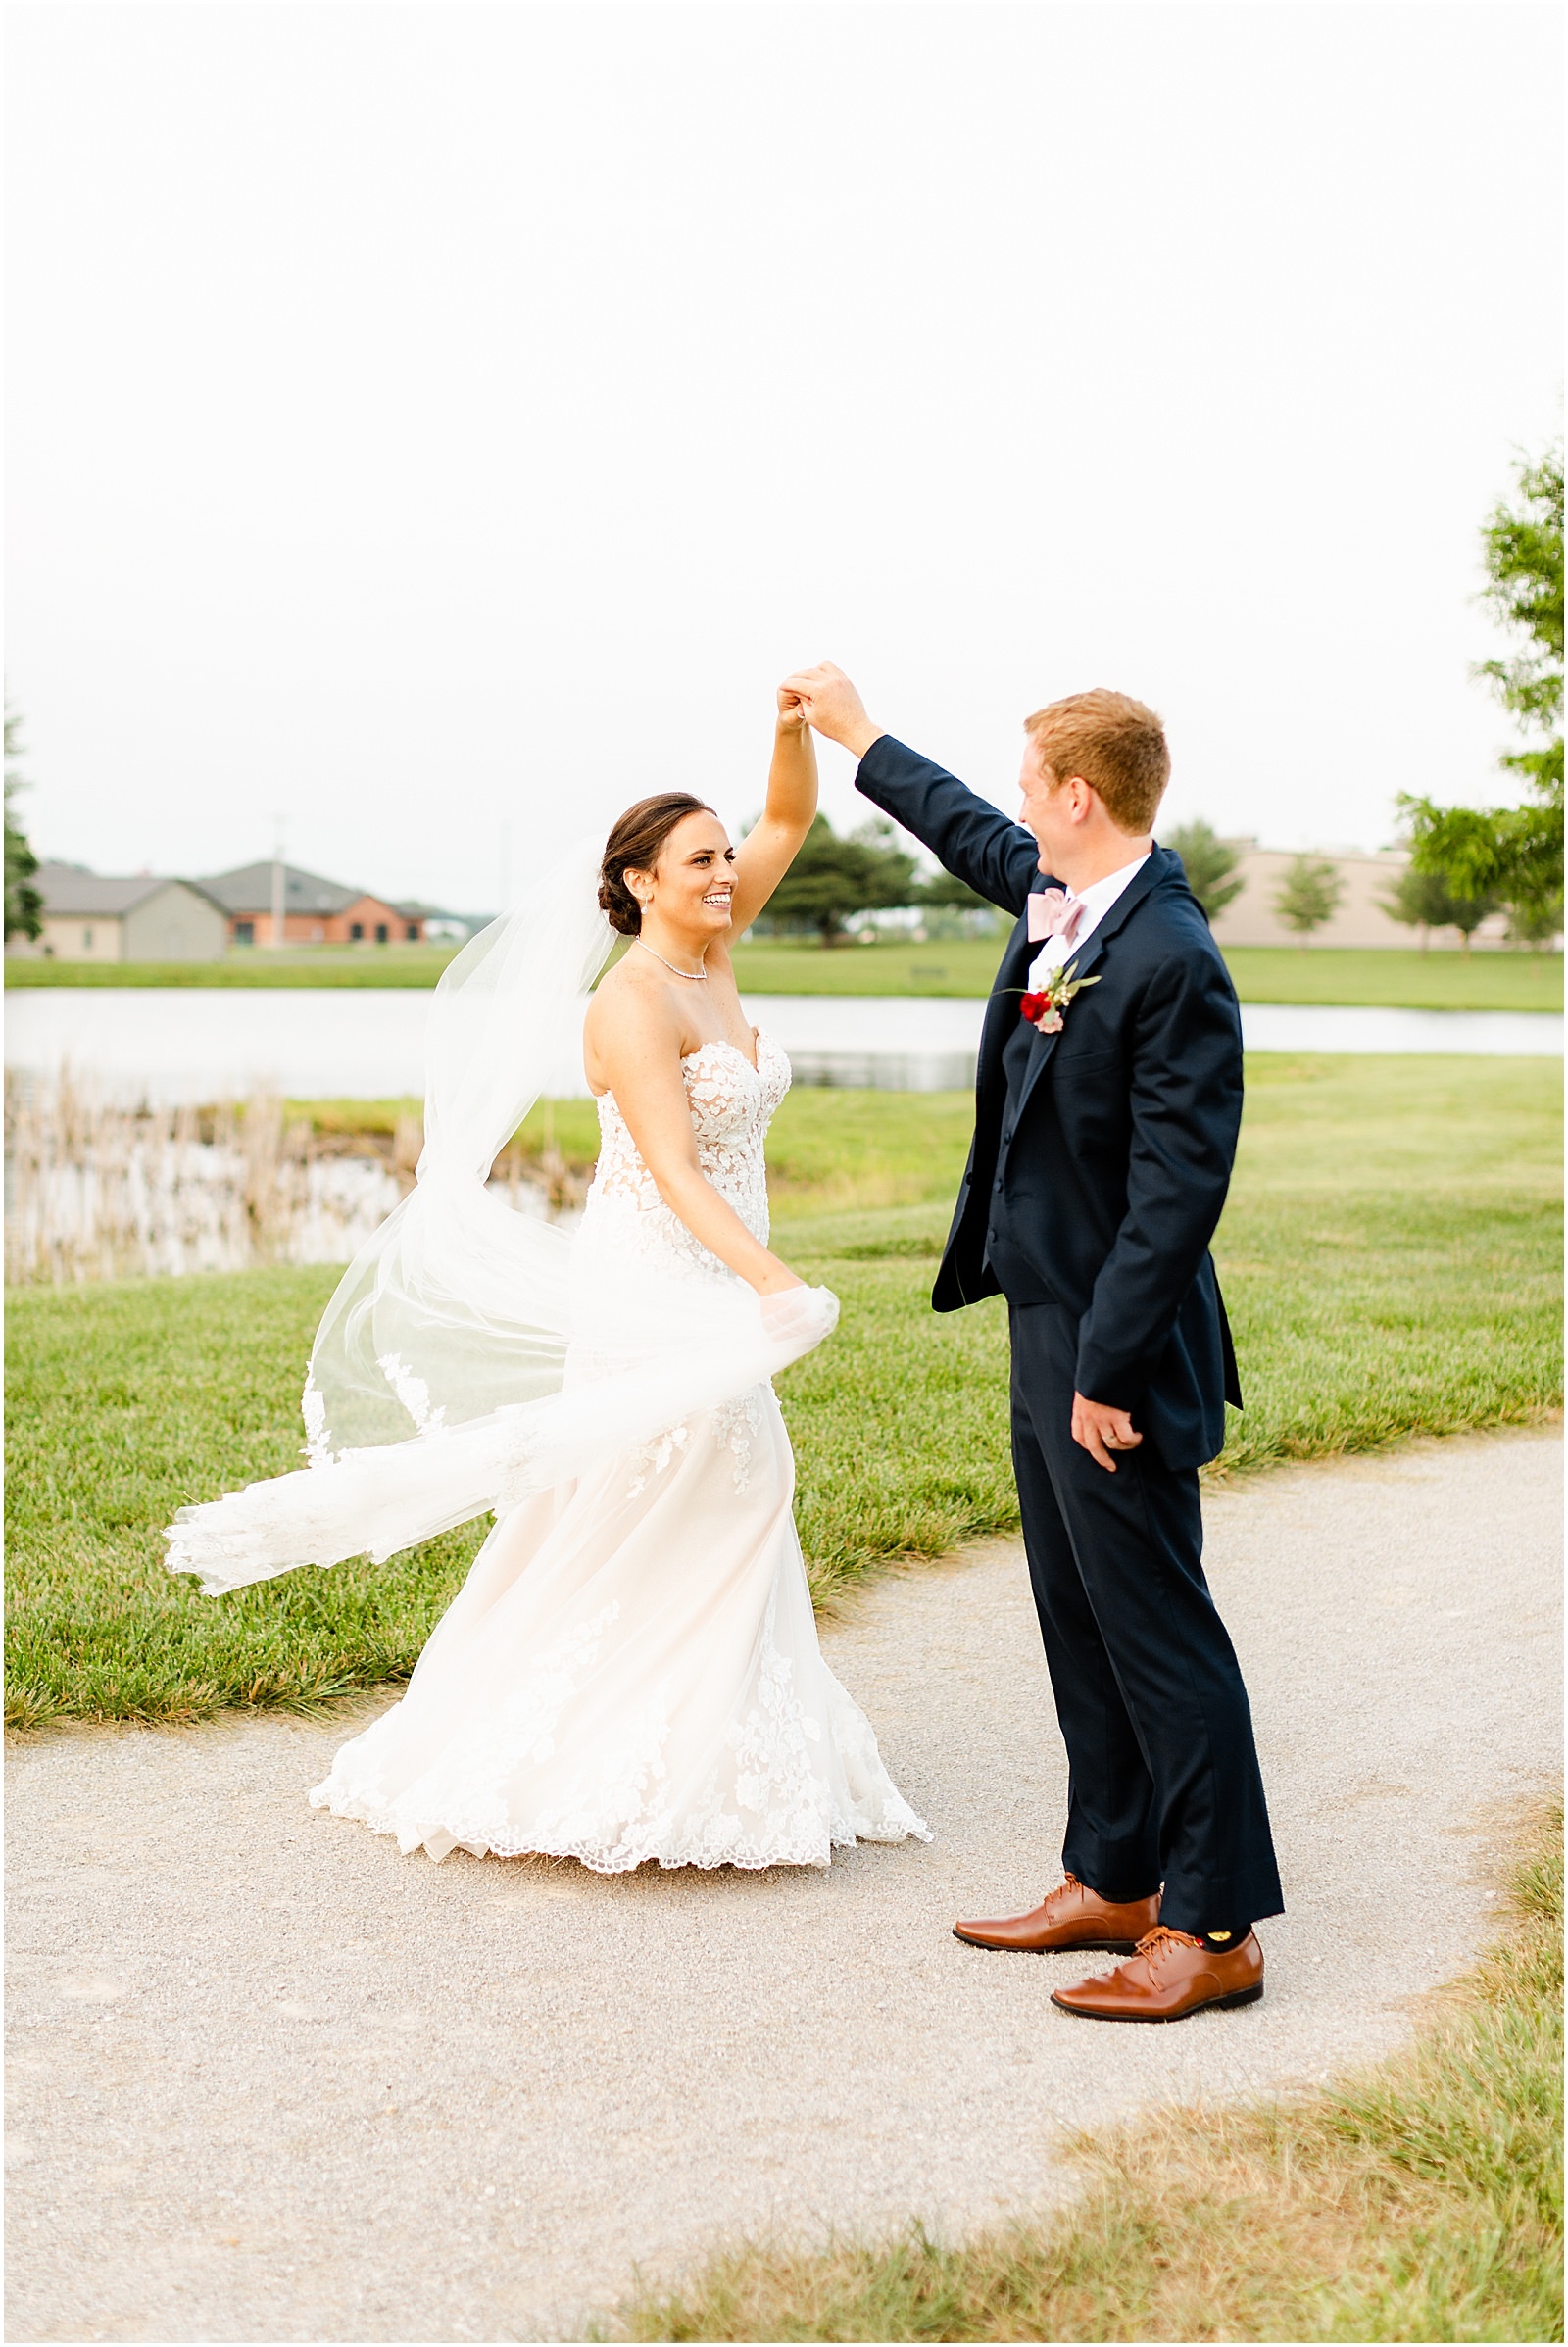 Deidra and Andrew | A Huntingburgh Indiana Wedding Bret and Brandie | Evansville Photographers | @bretandbrandie-0131.jpg